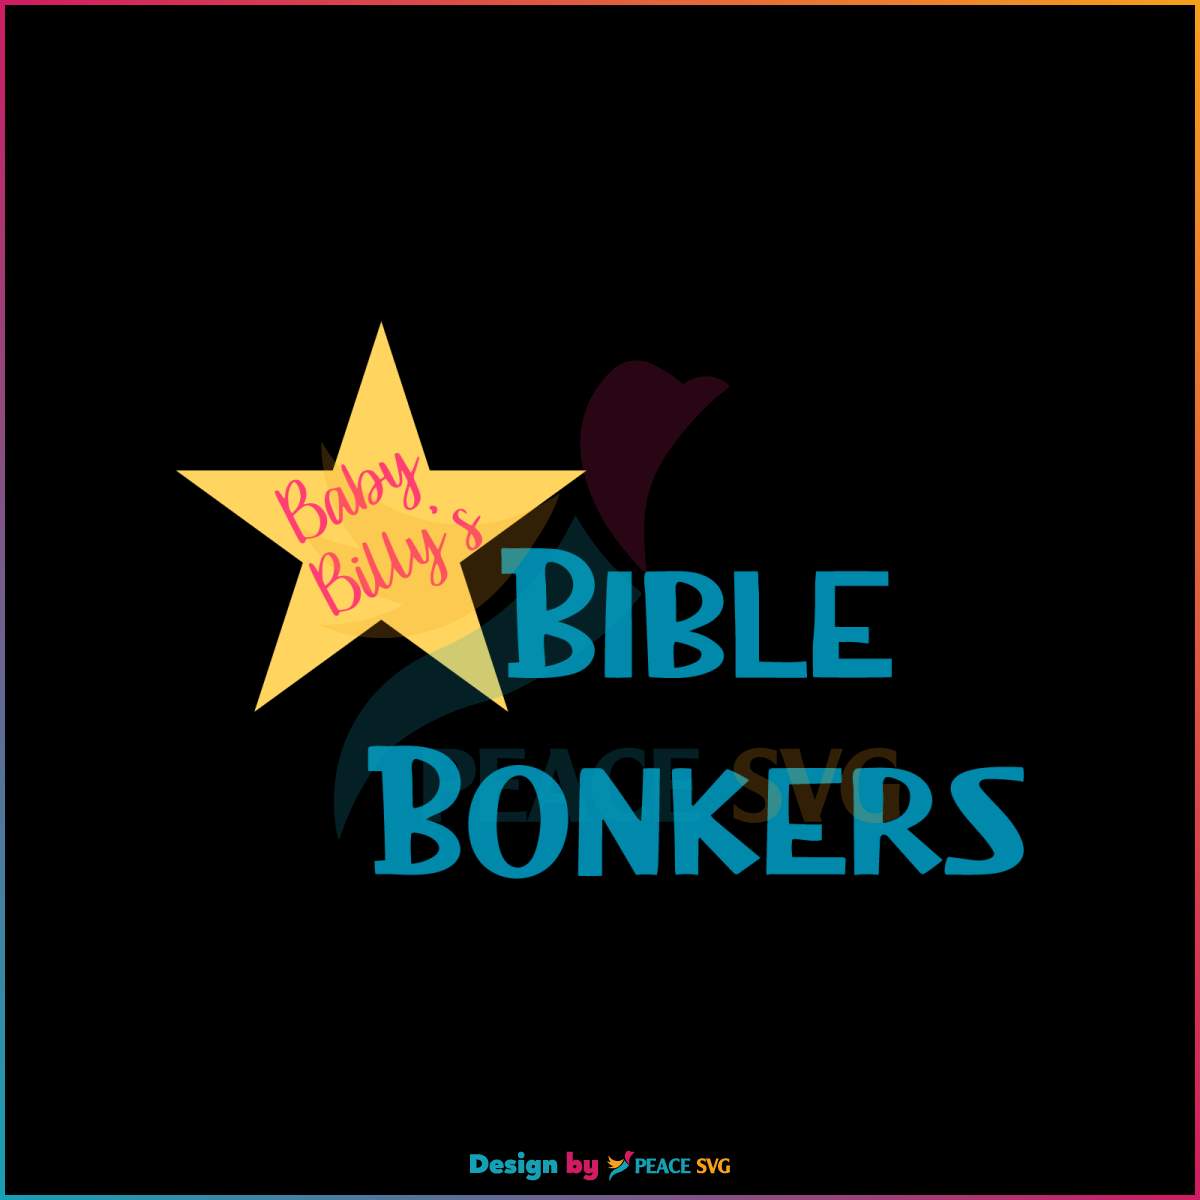 baby-billys-bible-bonkers-star-logo-svg-digital-cricut-file